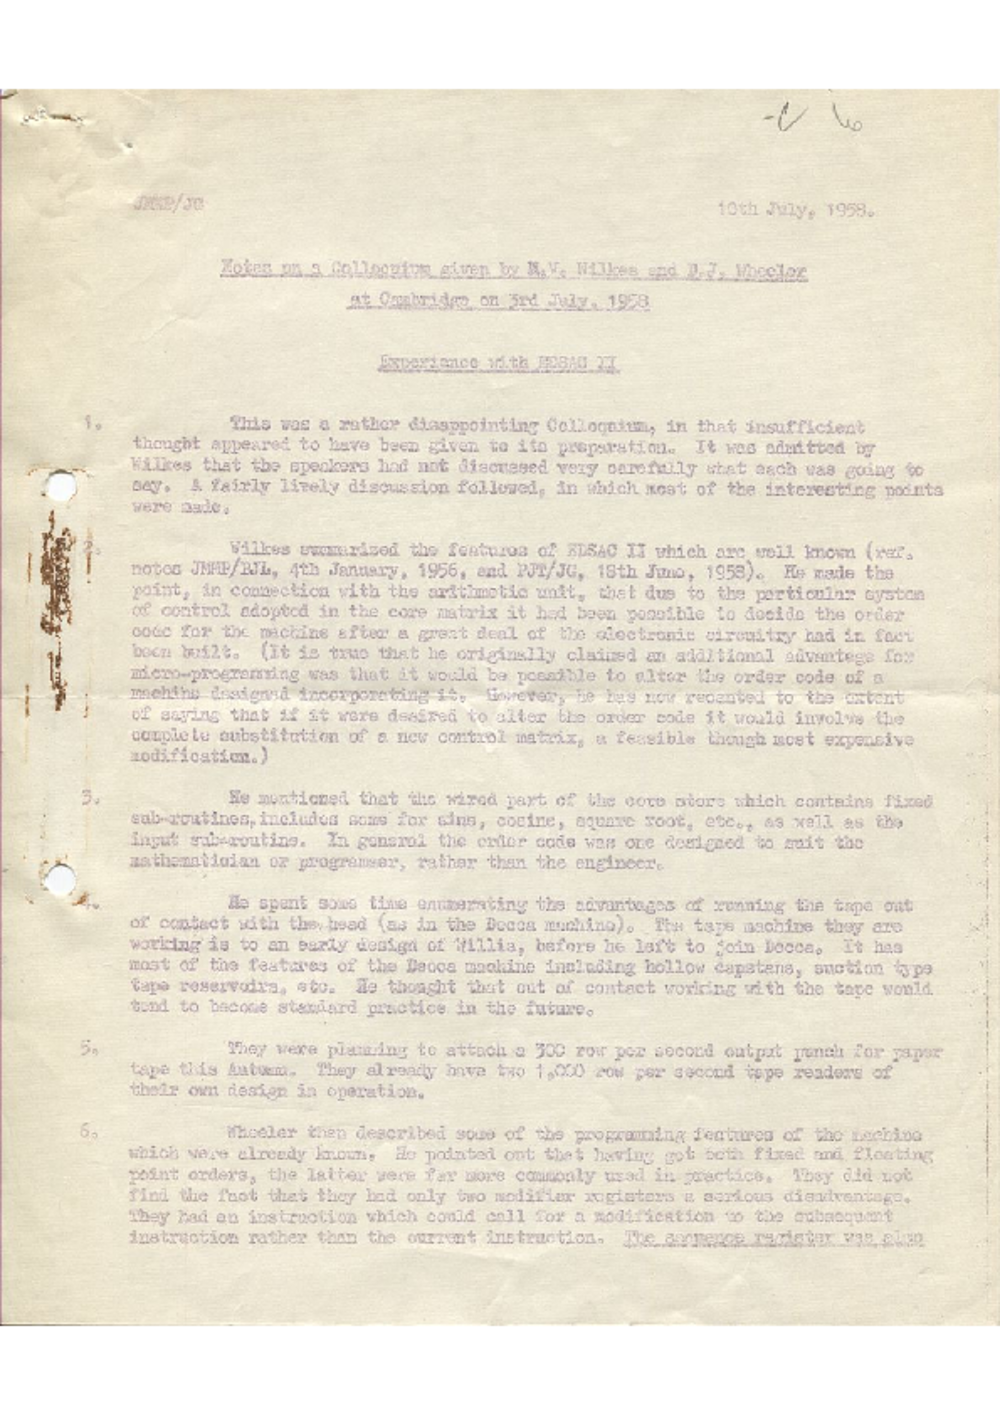 Article: 54877 Notes on a Colloquium at Cambridge, 3 Jul 1958